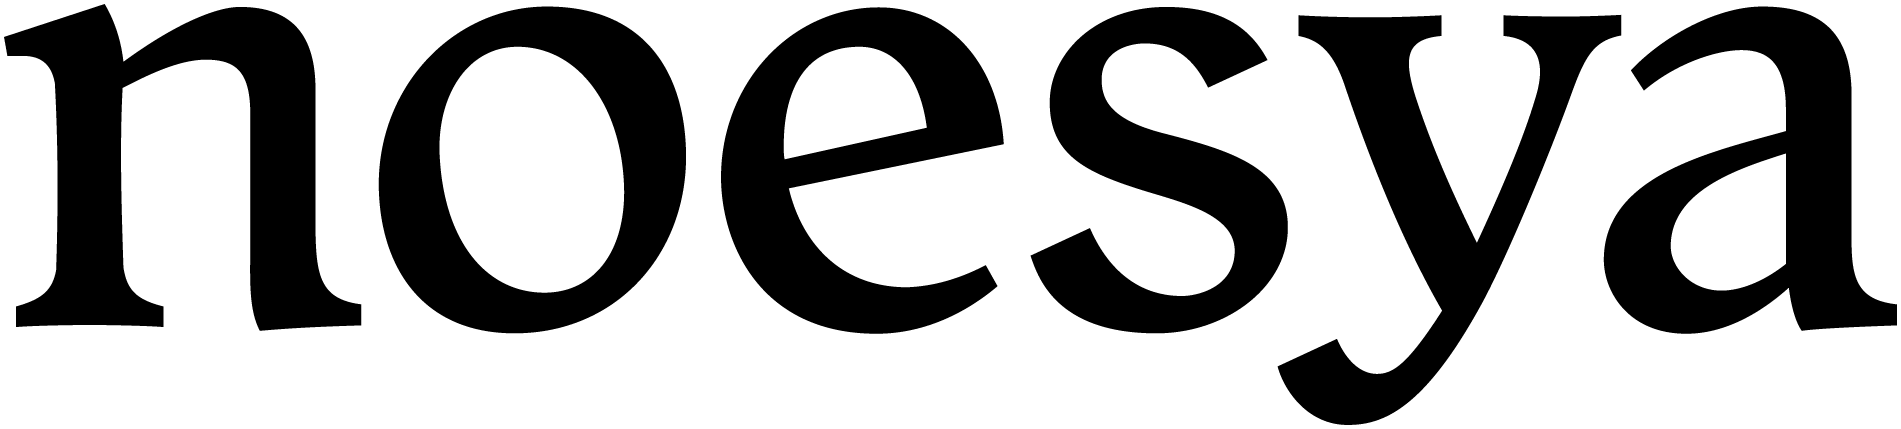 Logo-noesya-noir.png